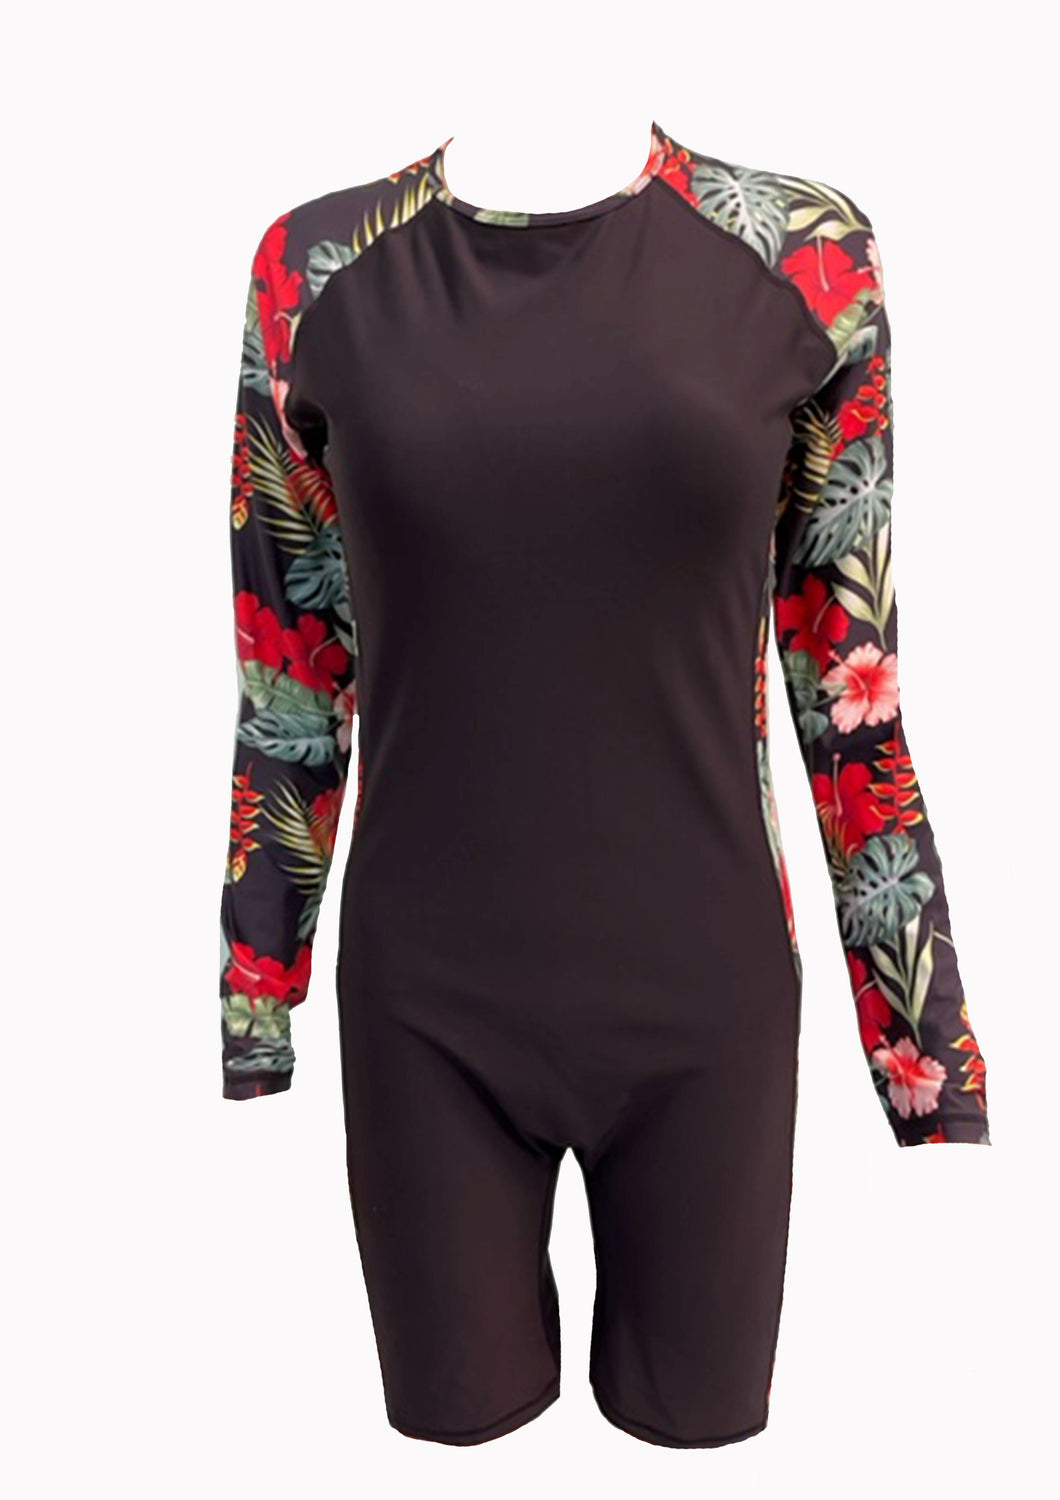 Adult UV50+ Amazon Long Sleeve and Long Shorts One Piece Swimsuit